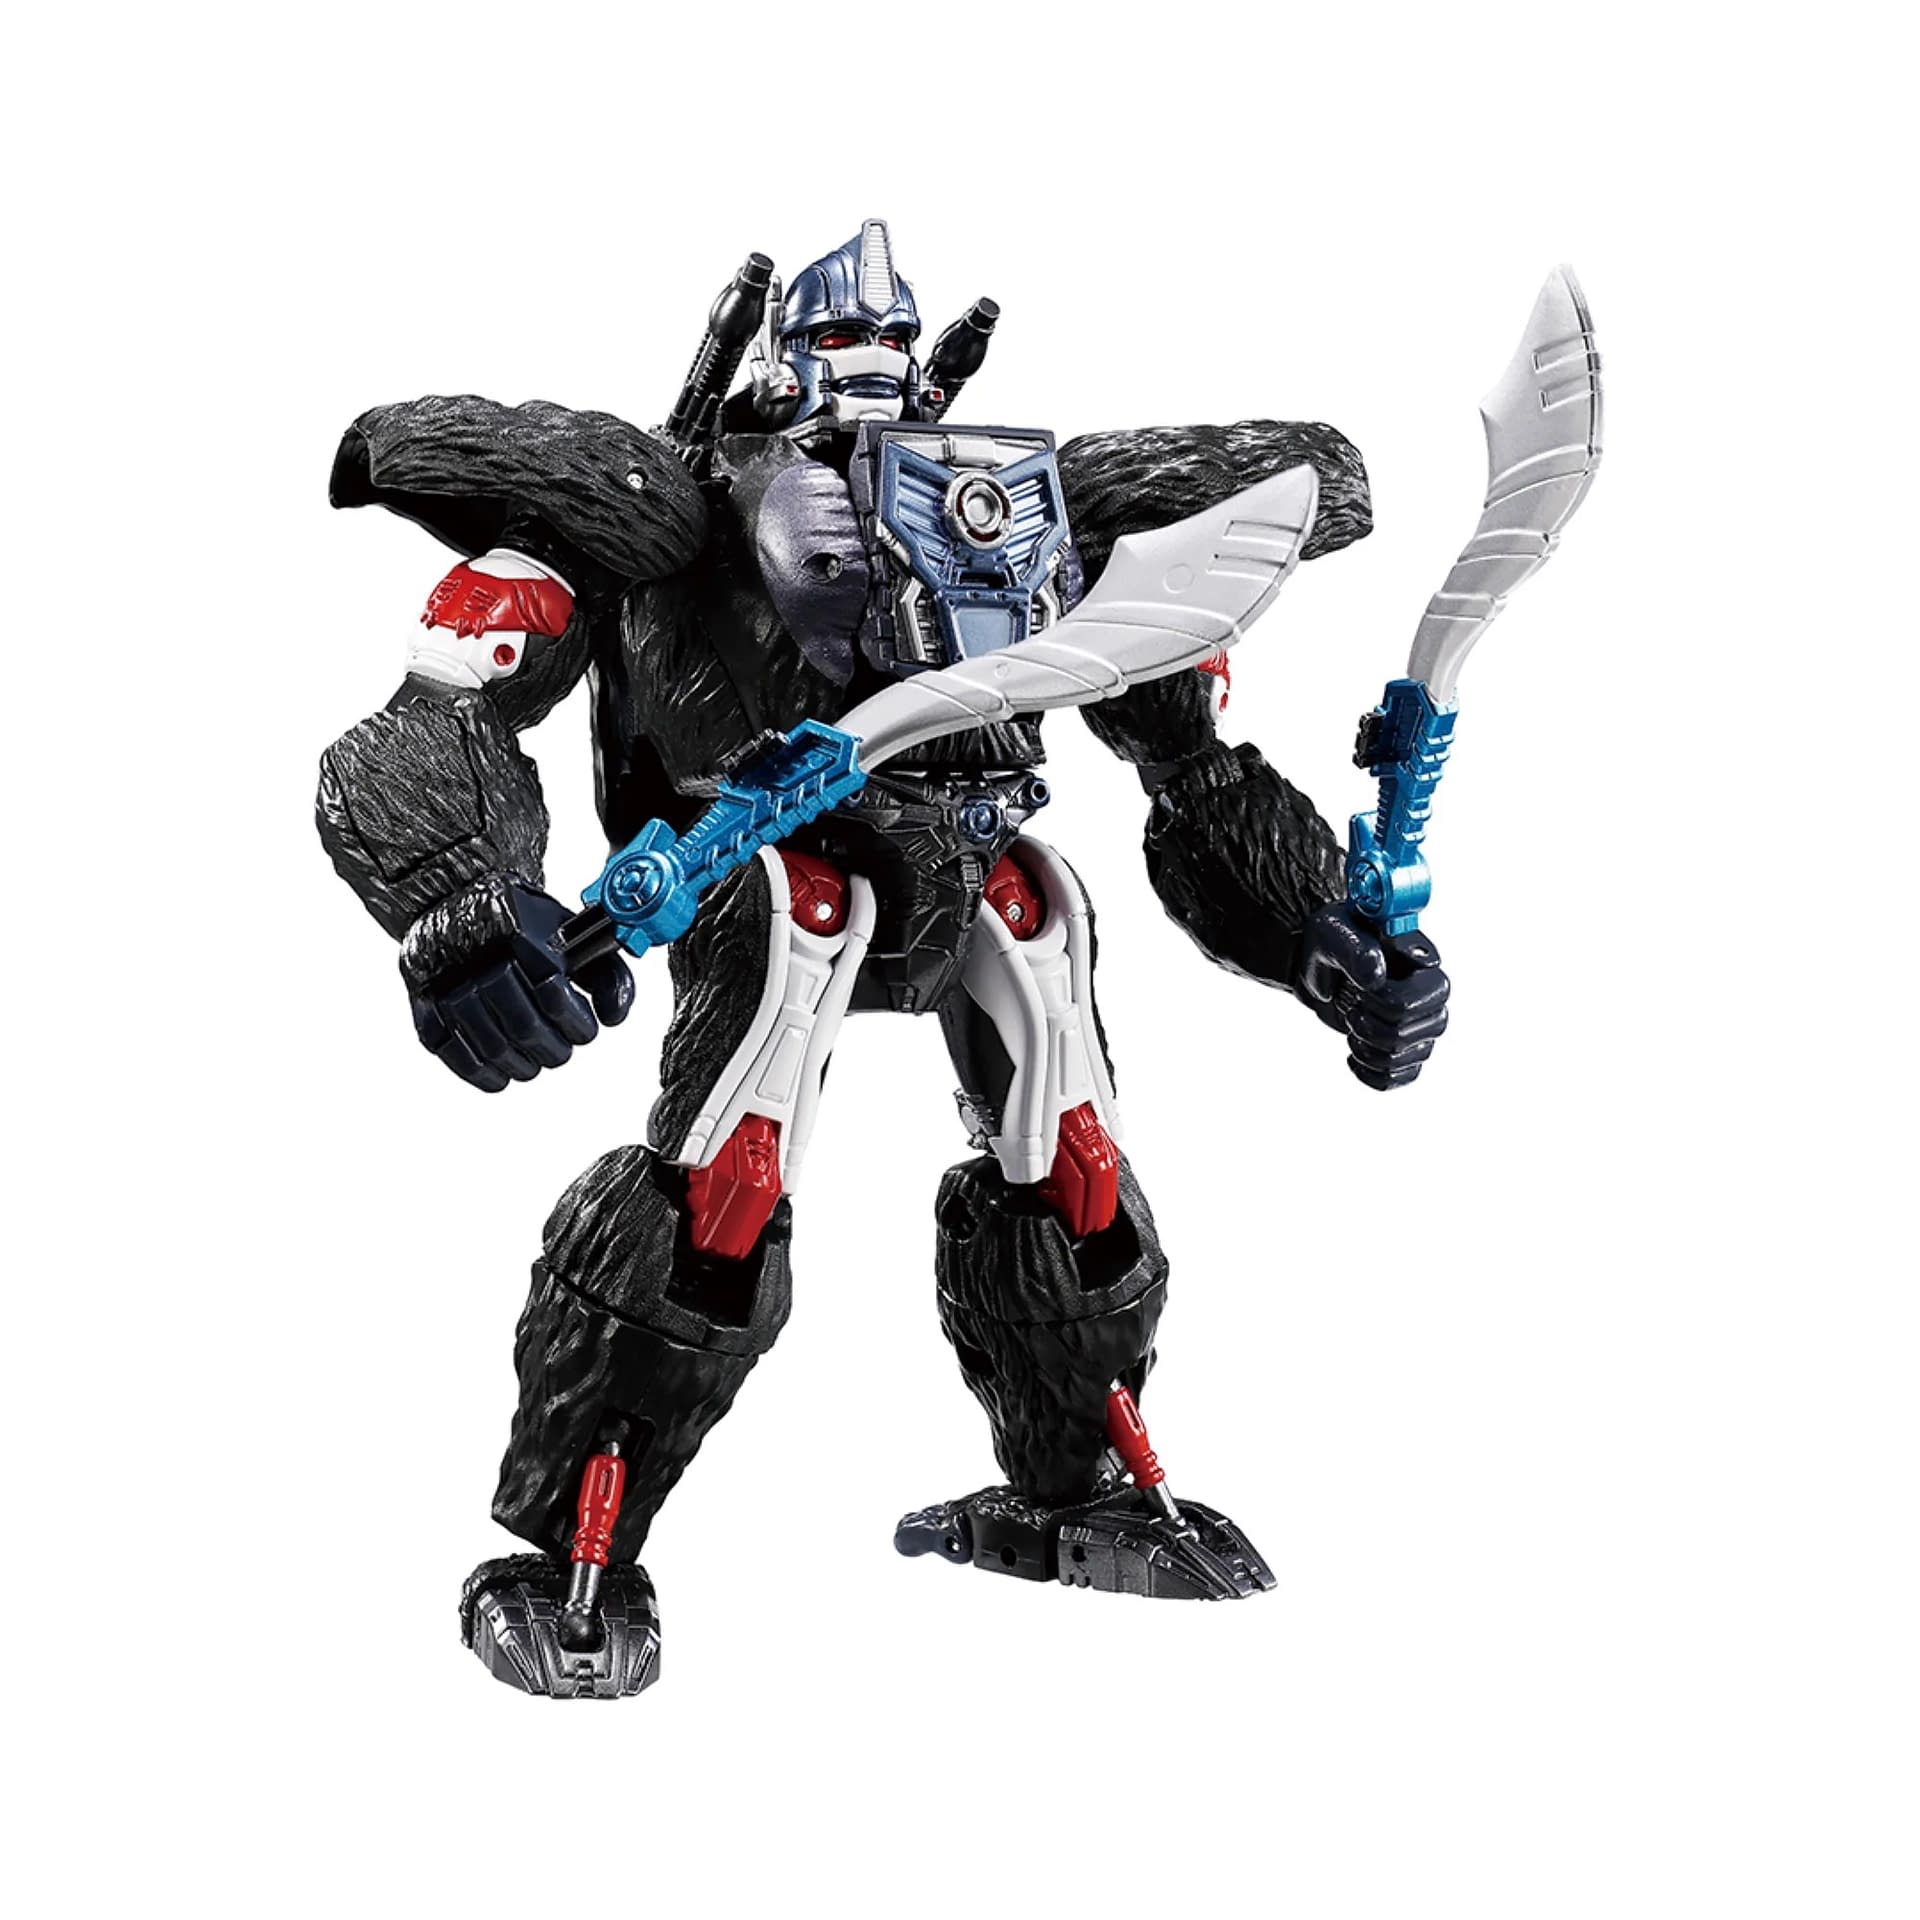 Transformers Takara Tomy Optimus Primal vs. Megatron 2-Pack Revealed